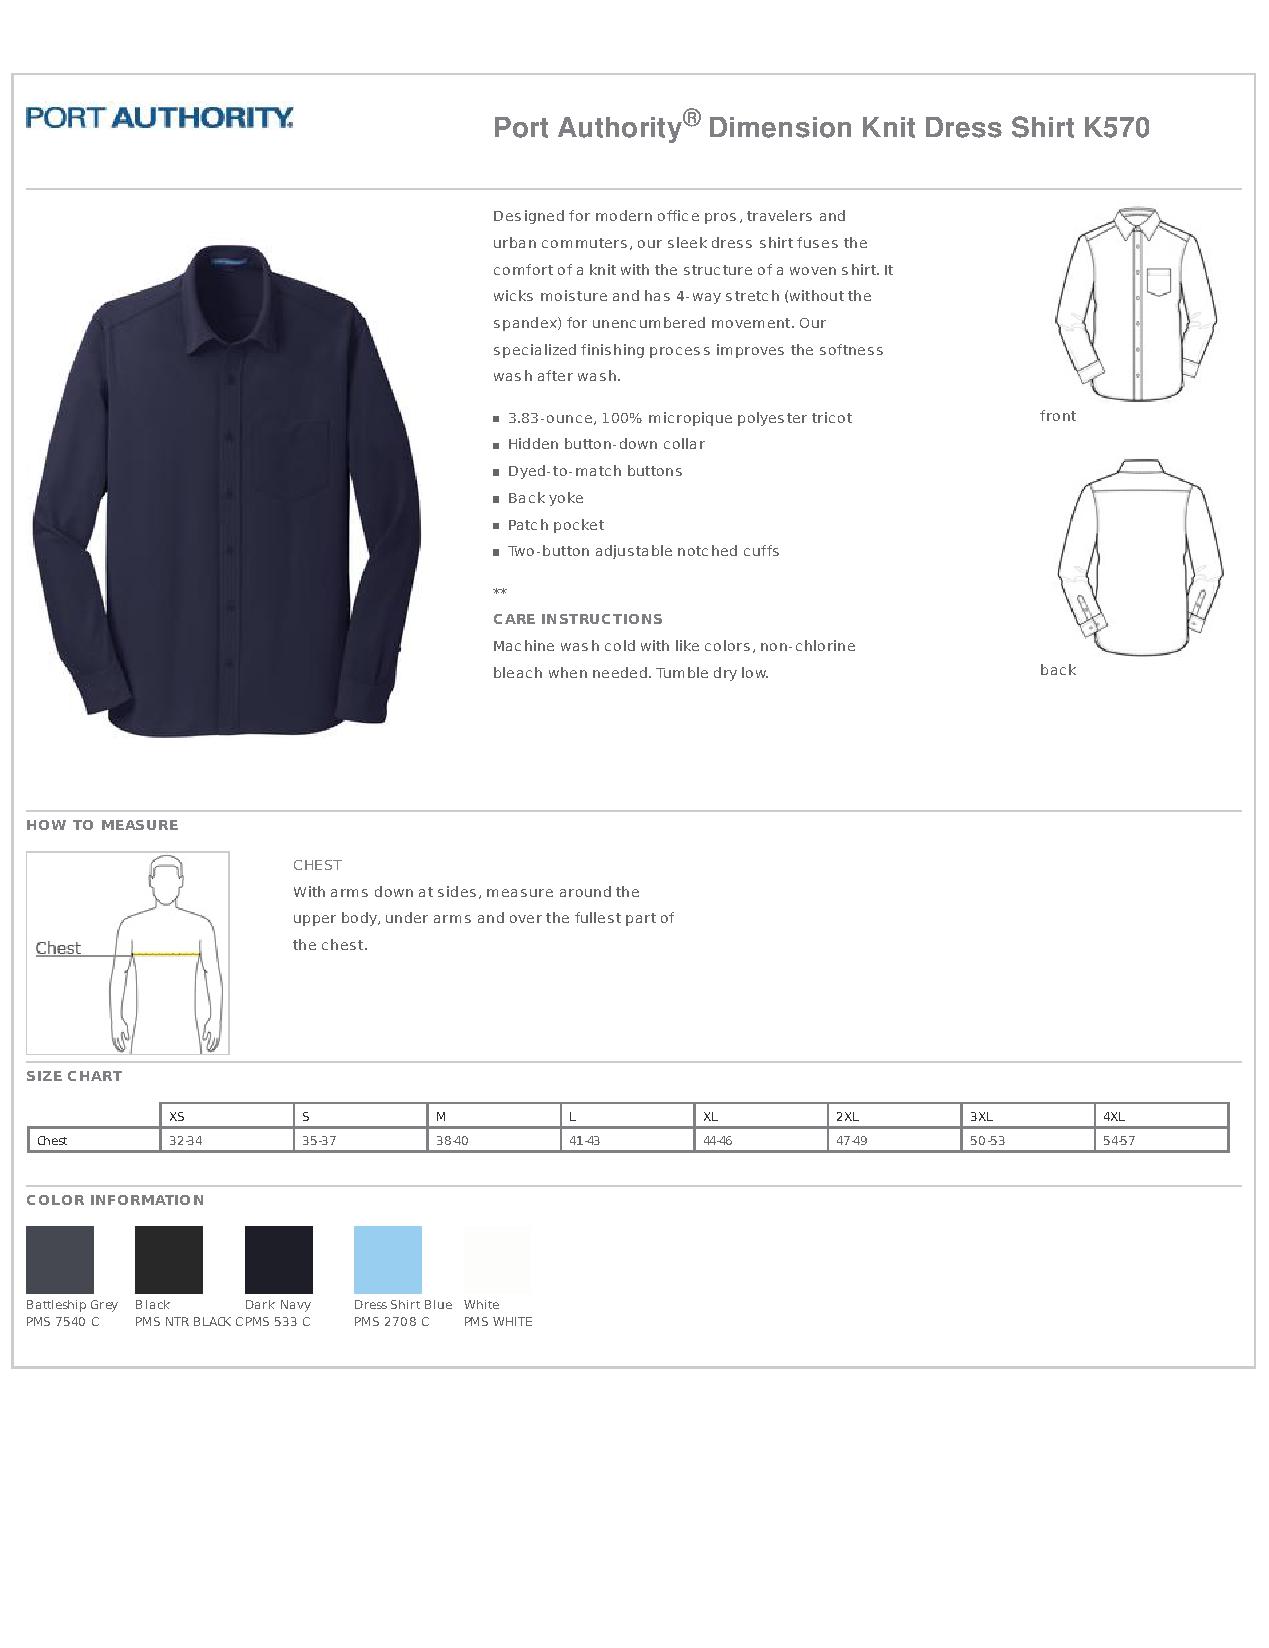 Port Authority® K570 - Dimension Knit Dress Shirt - Woven/Dress Shirts